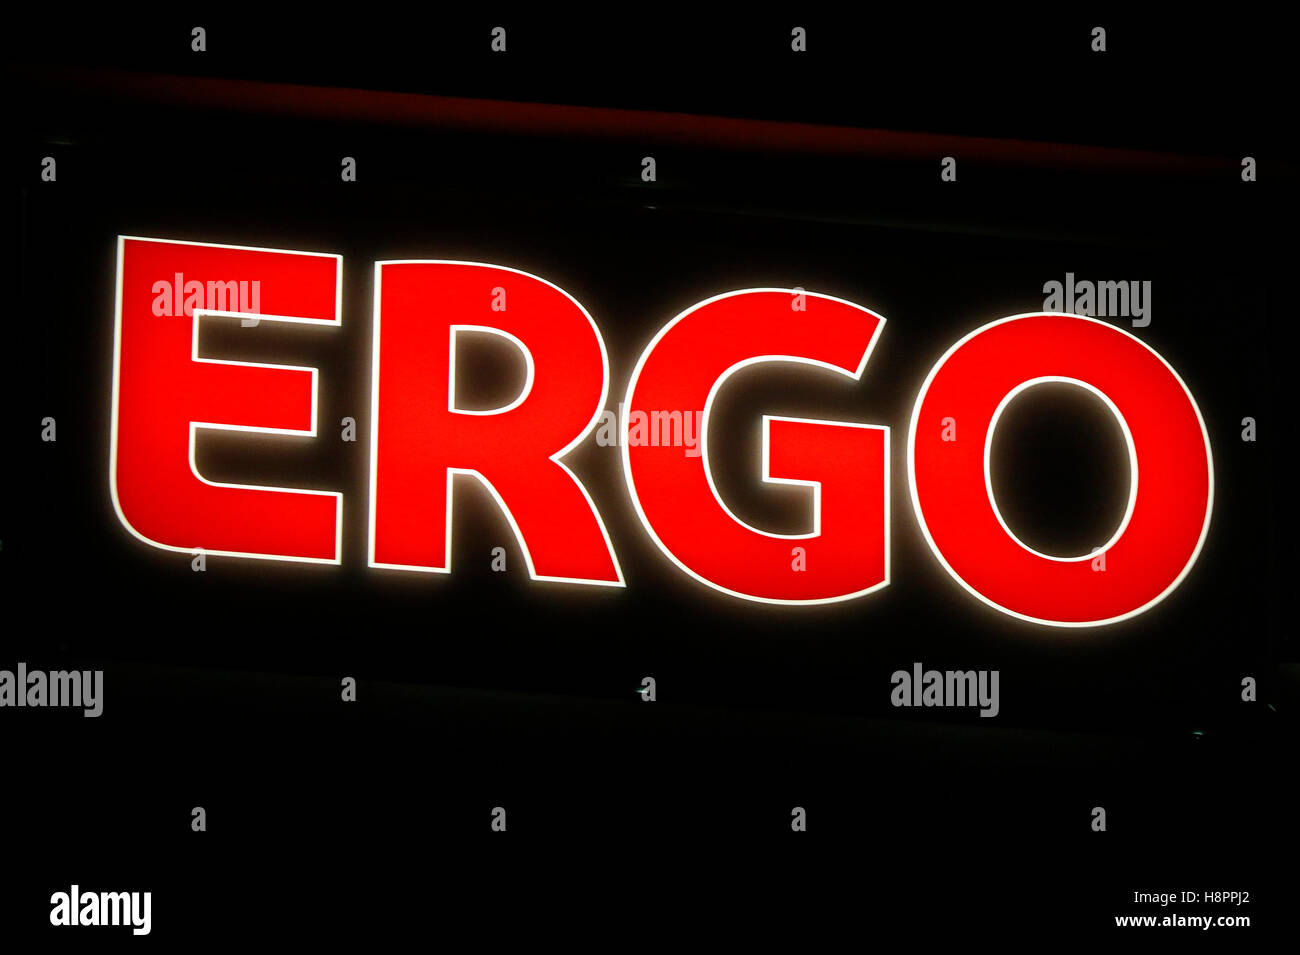 Ergo logo hi-res stock photography and images - Alamy